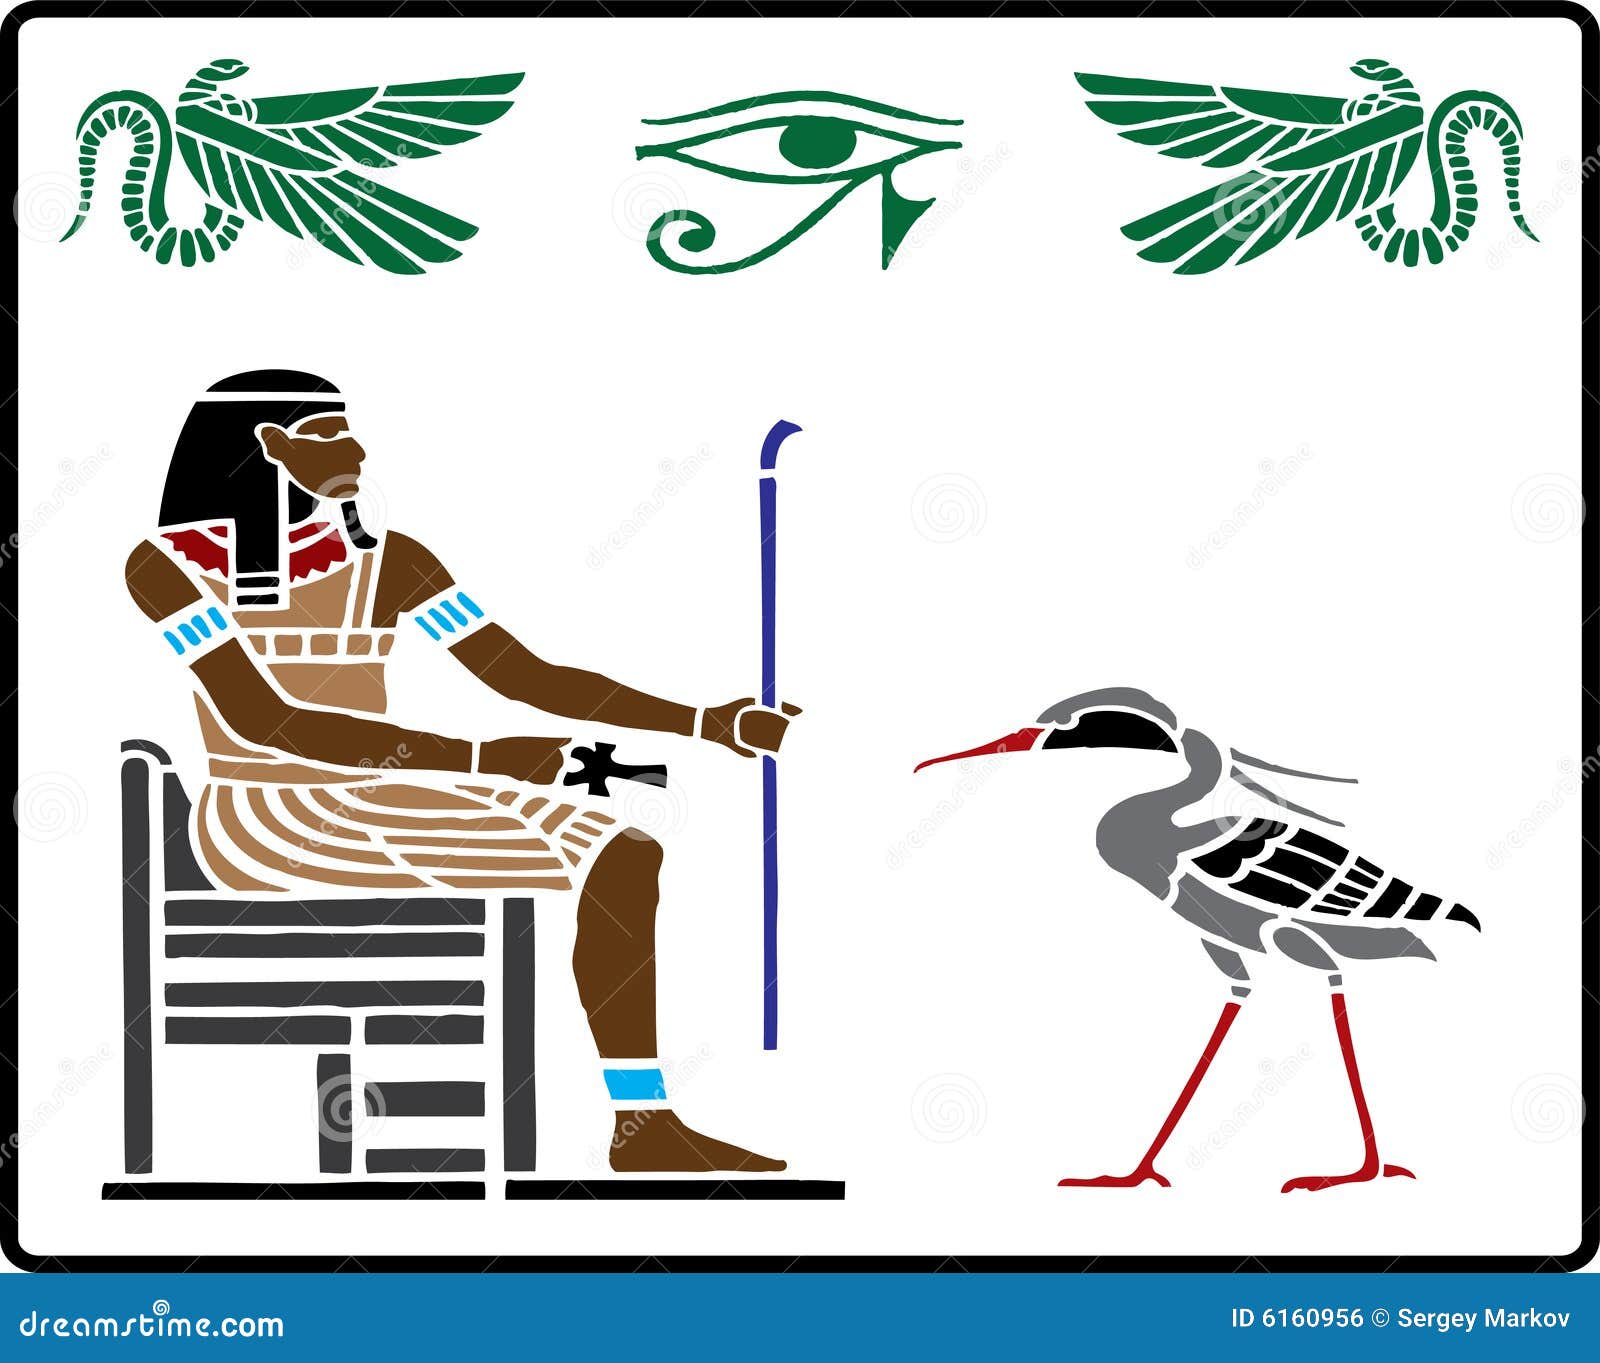 egyptian hieroglyphics - 5